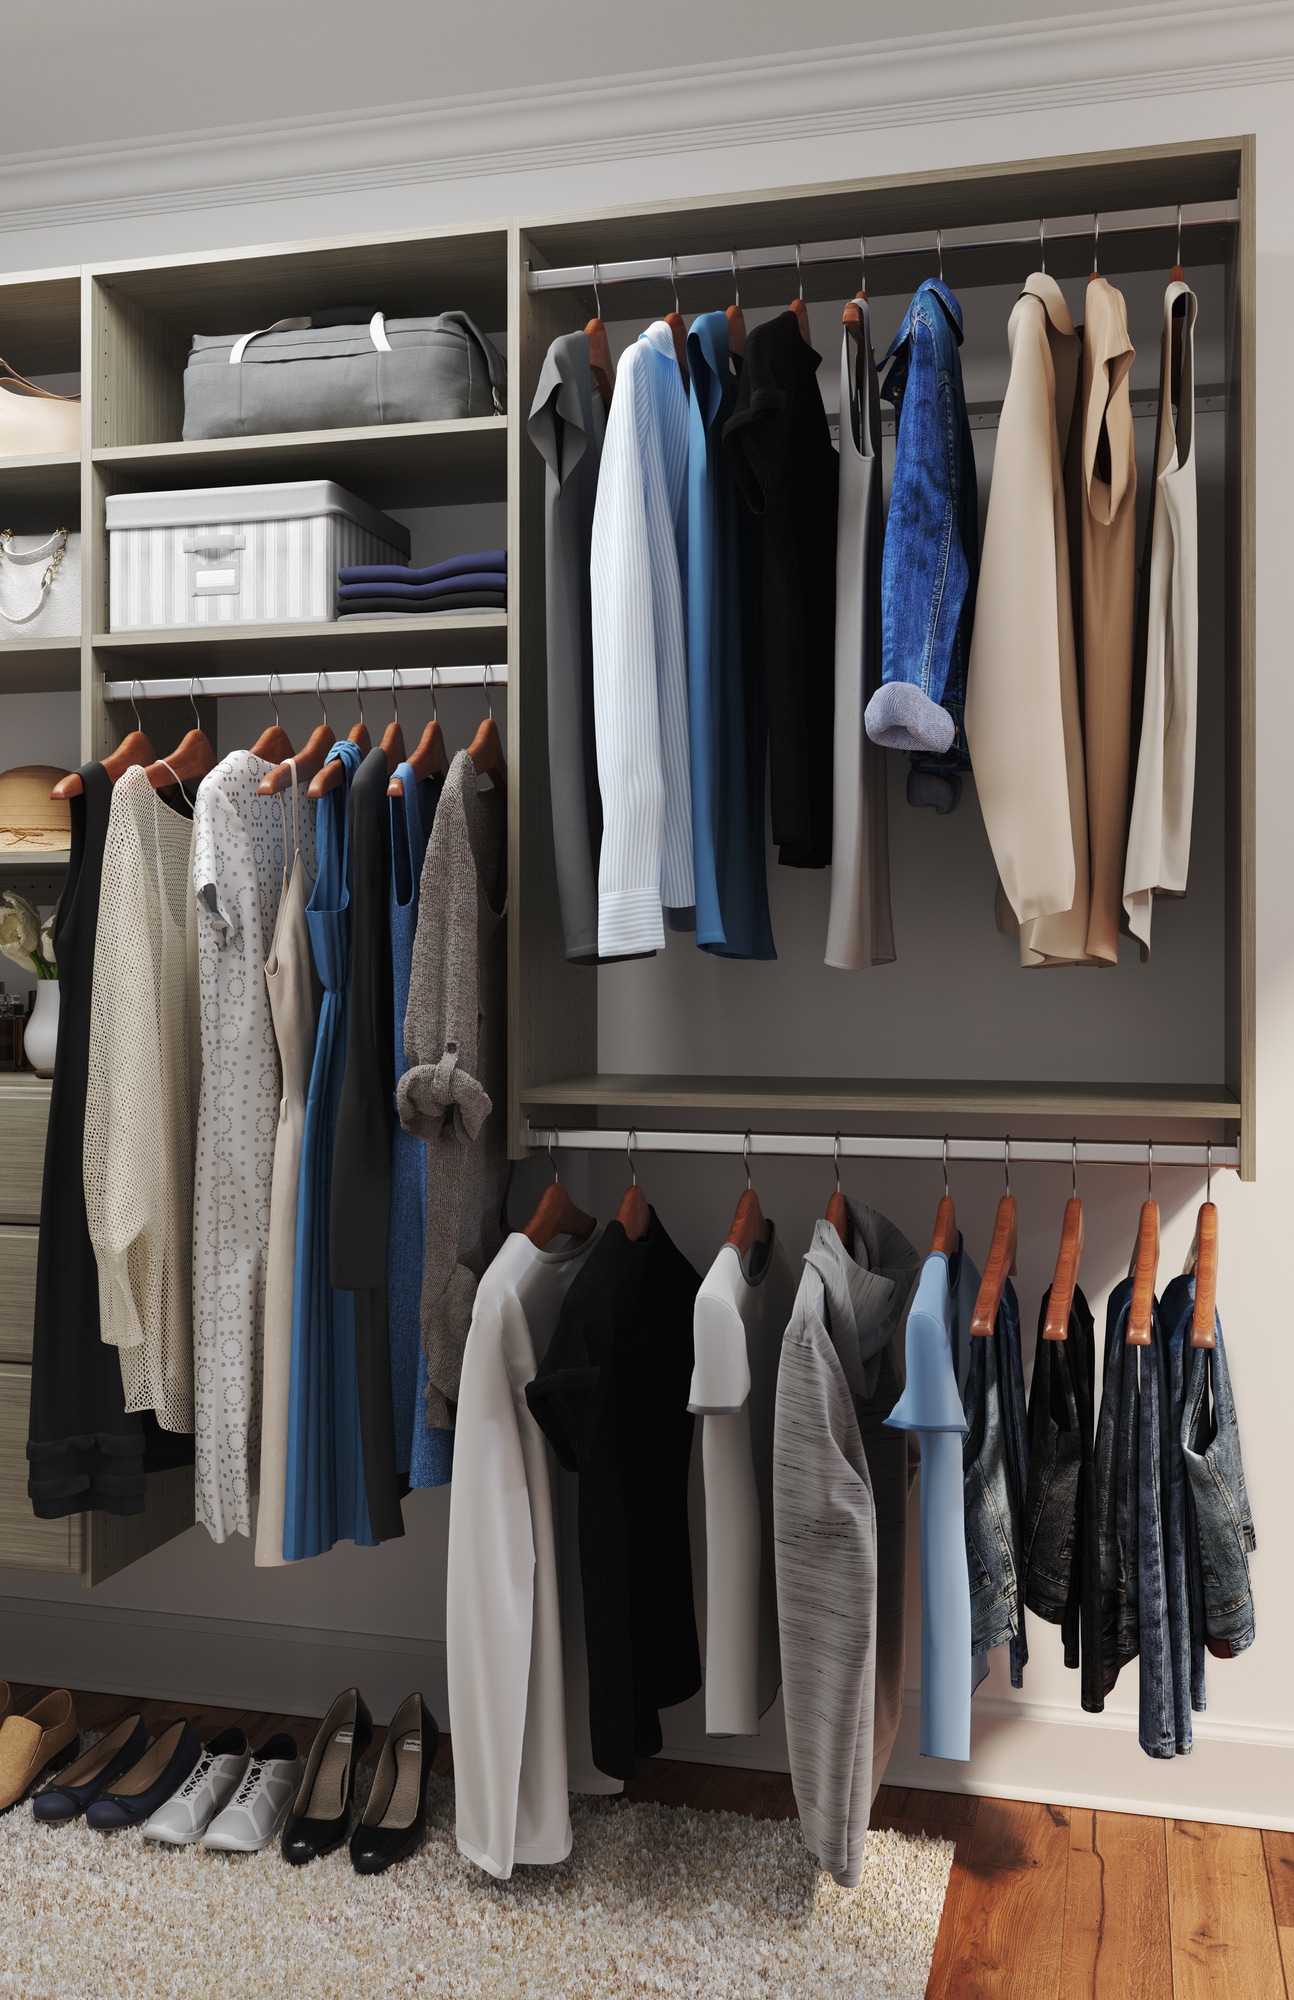 Organized Closet in 5 Easy Steps • Everyday Cheapskate